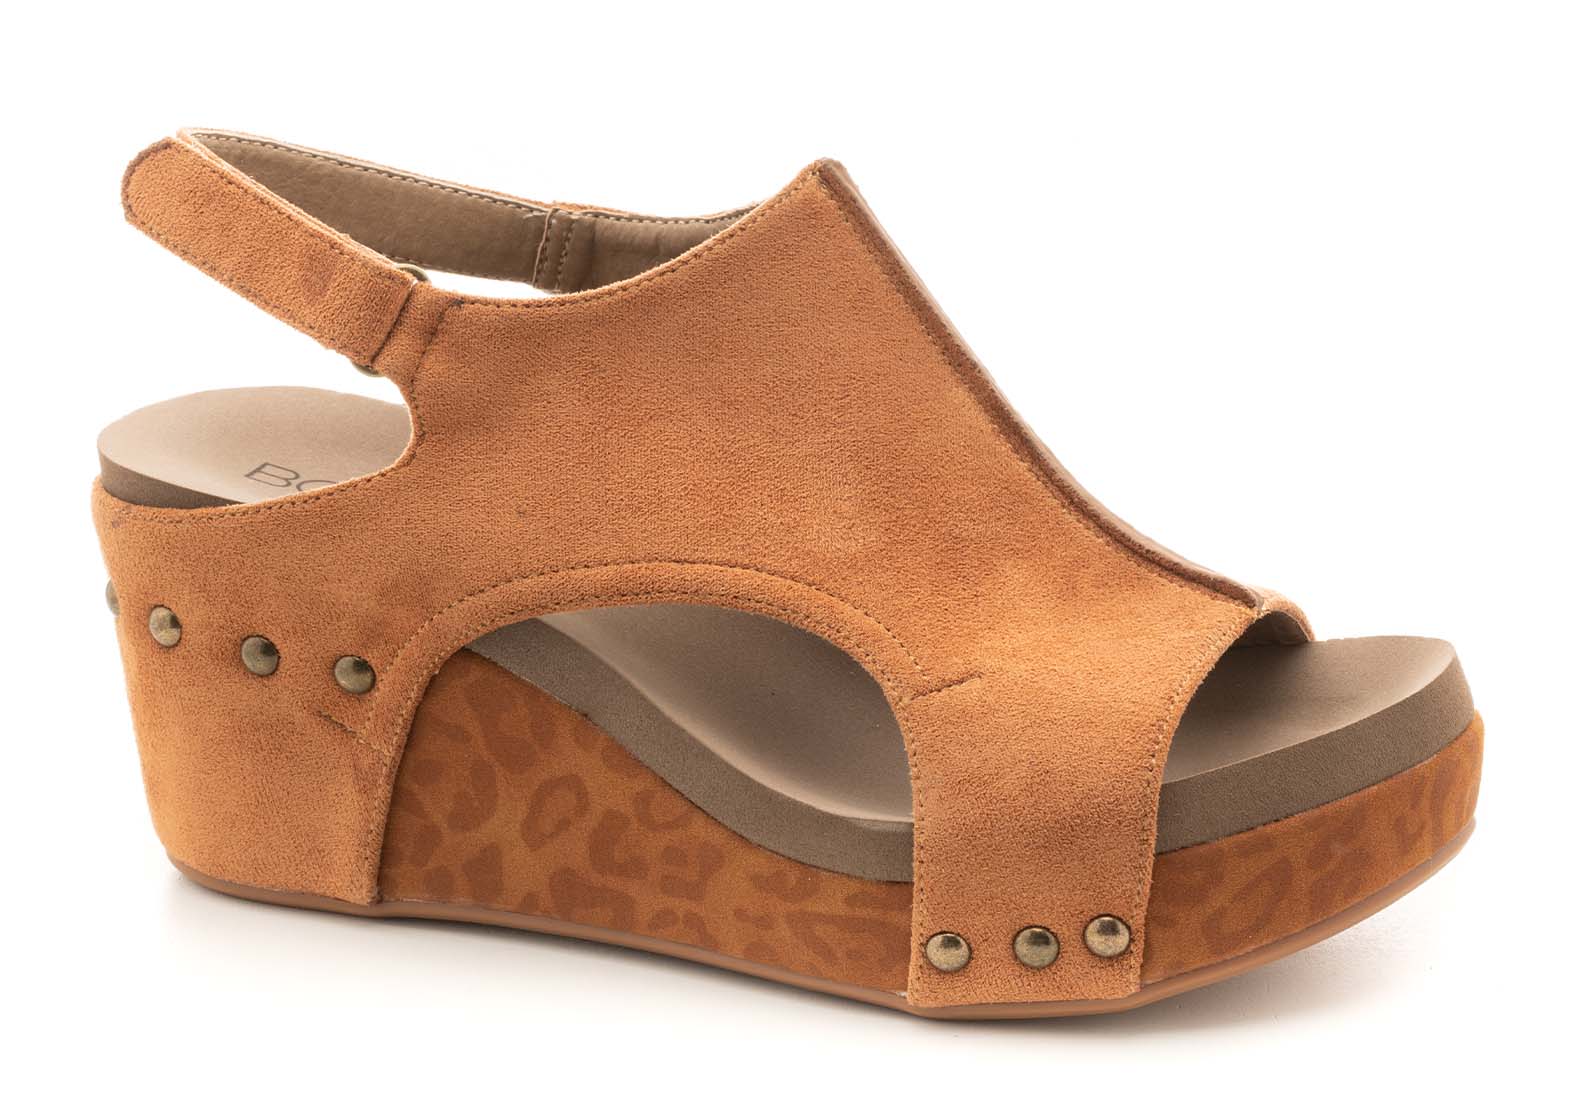 Corkys Shoes - Carley Cognac/Leopard Wedge   SALE 40% OFF NOW $42.95